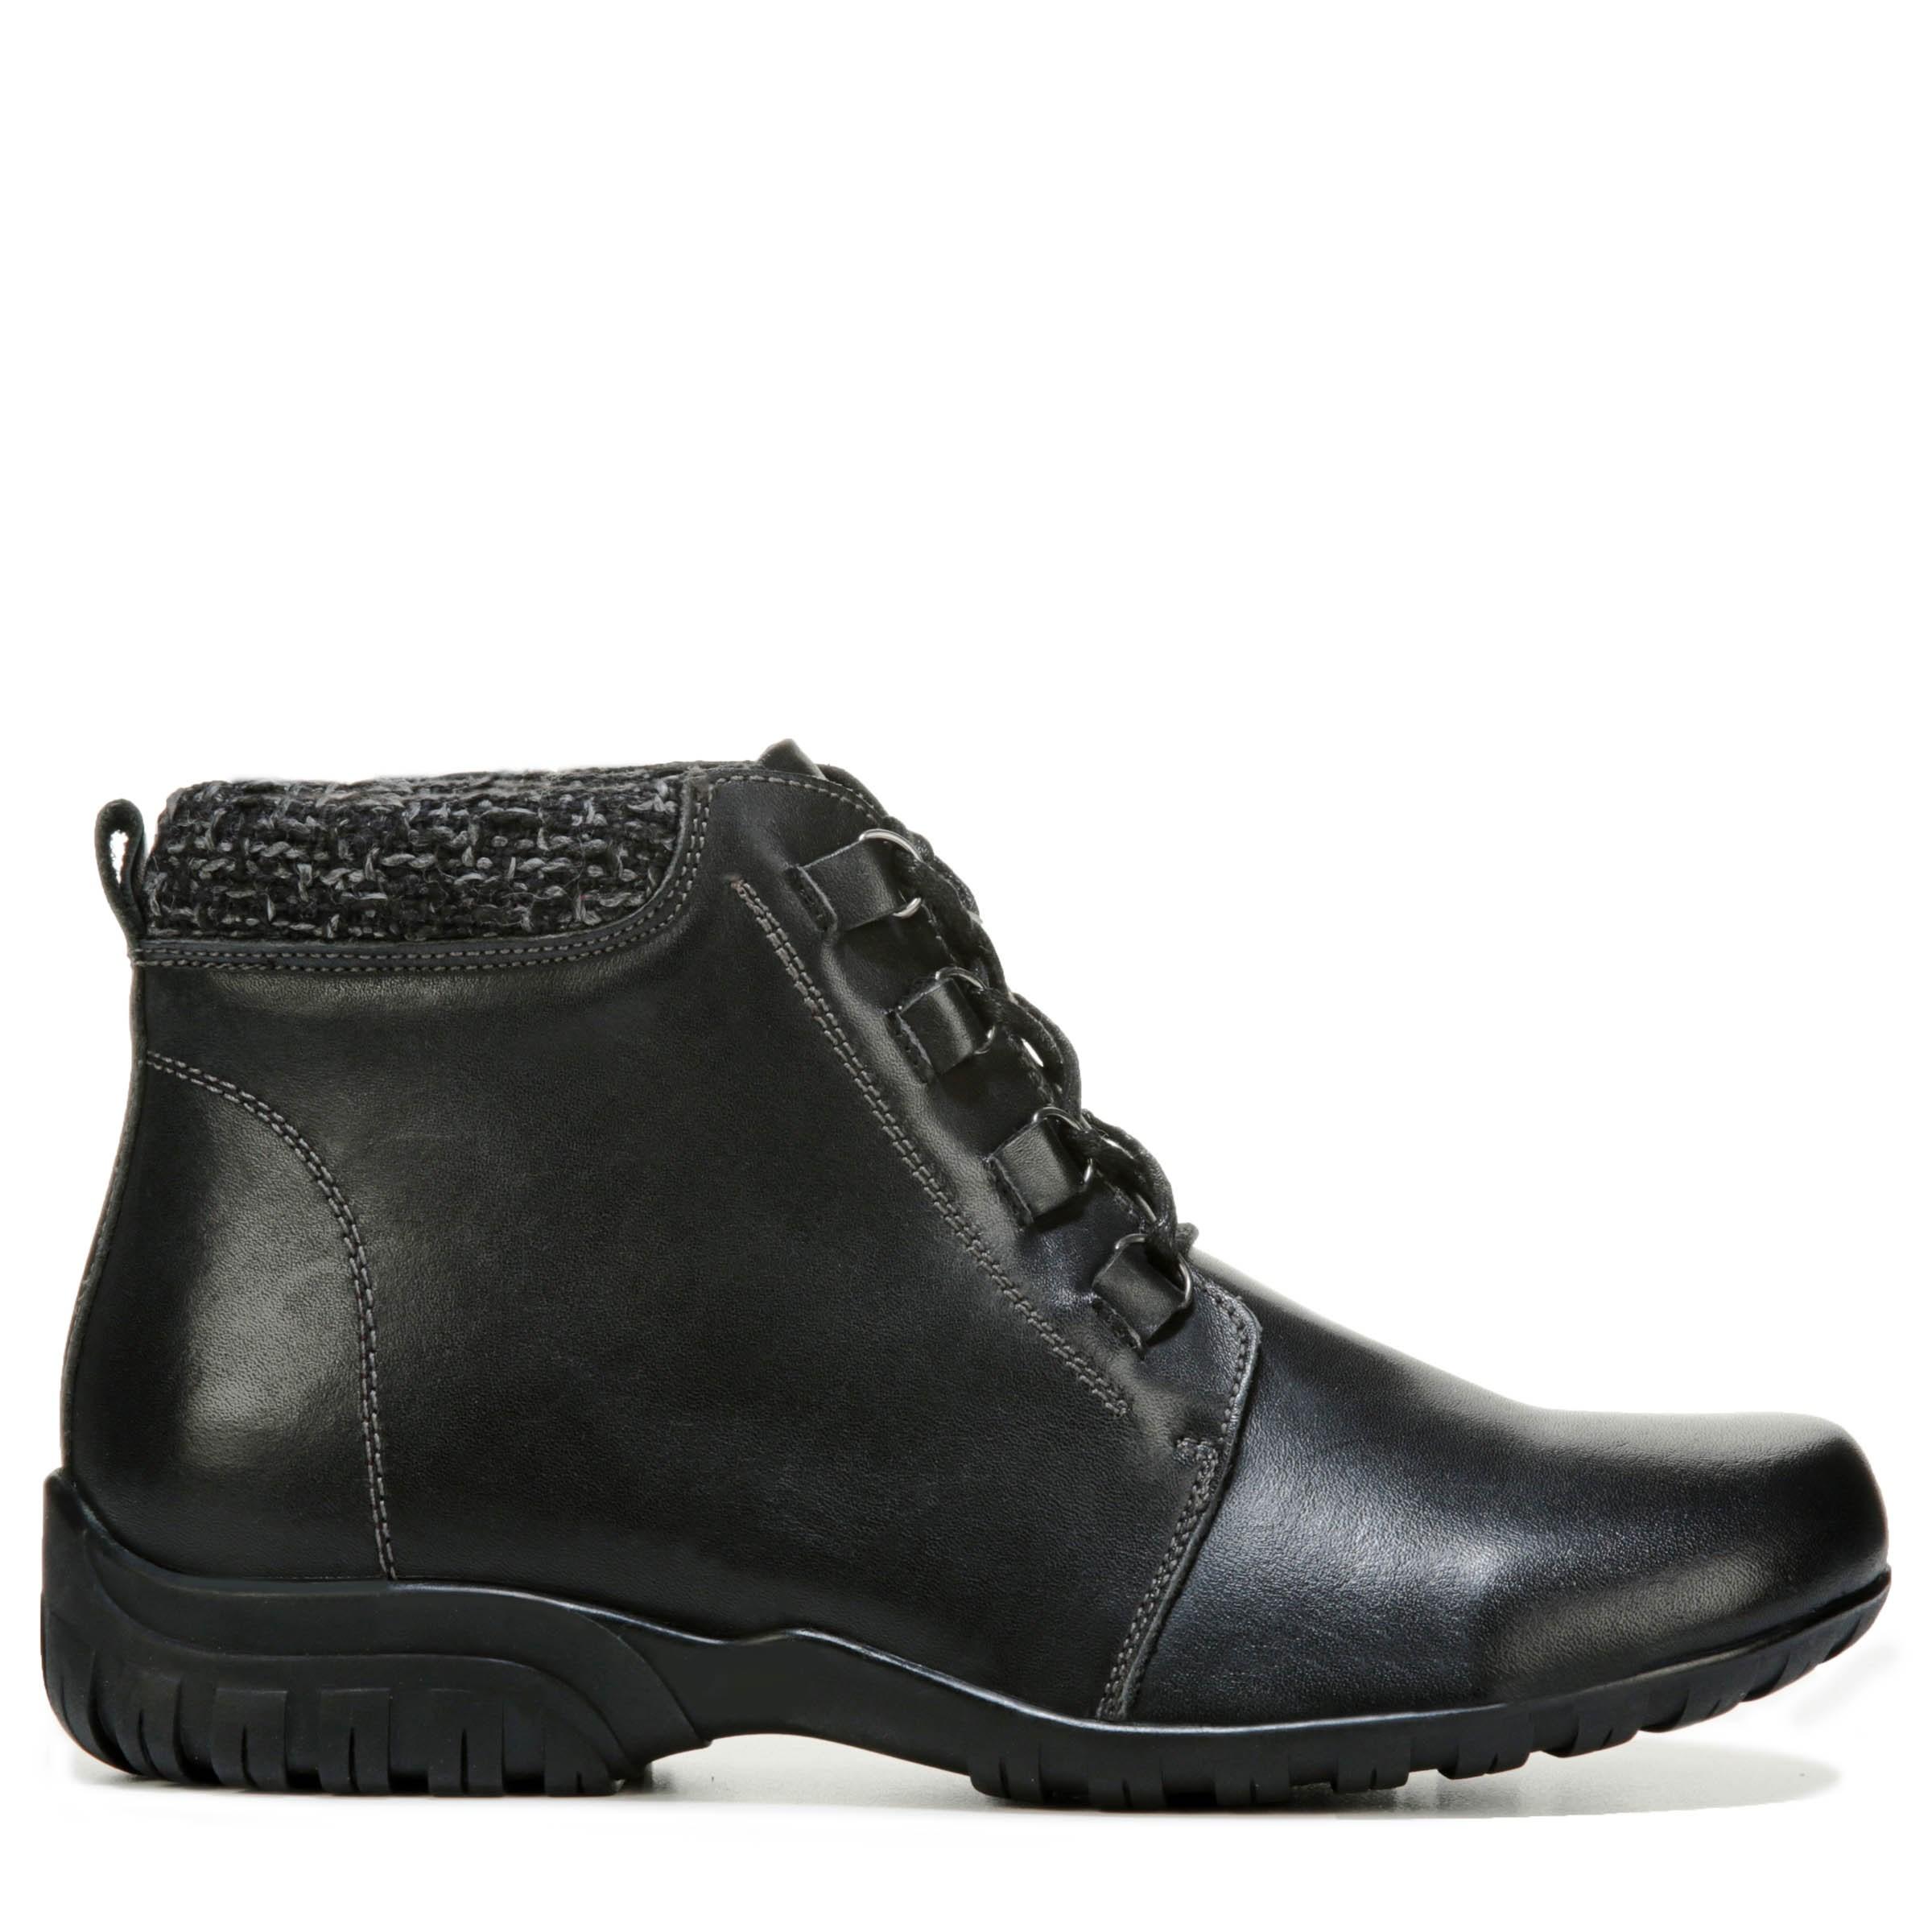 Propet Suede Delaney Narrow/medium/wide Boots in Black - Lyst